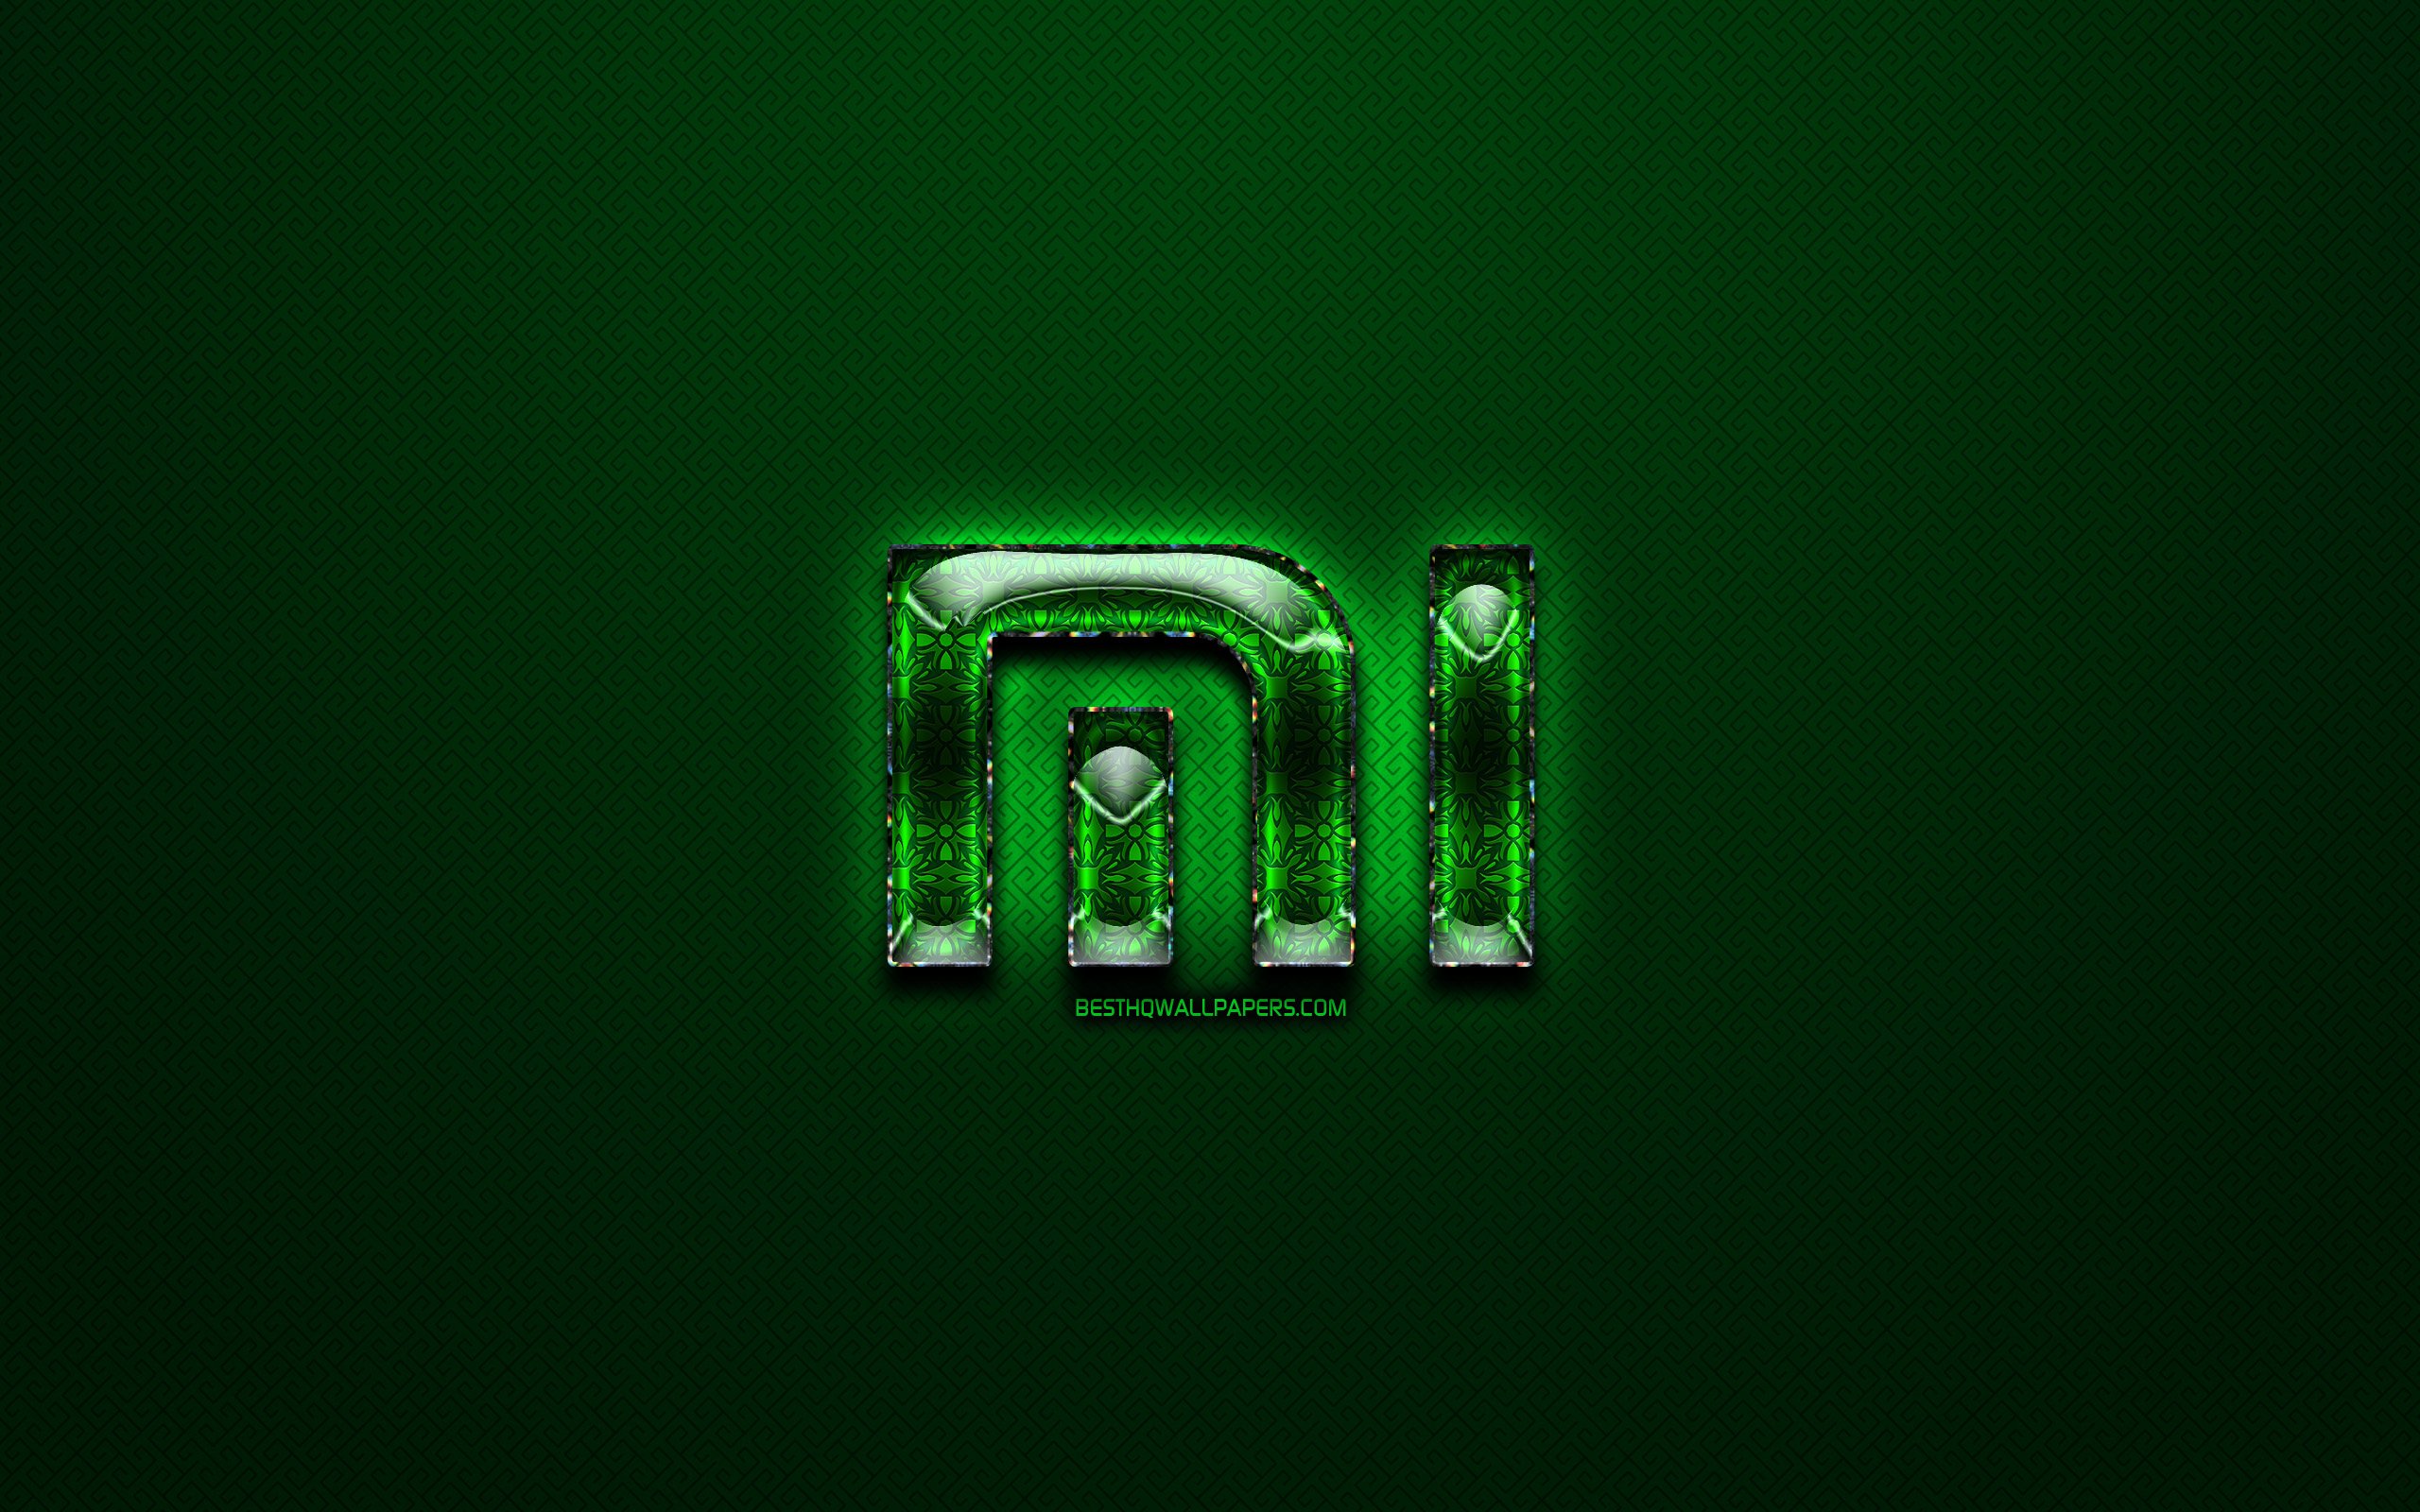 Download wallpaper Xiaomi green logo, green vintage